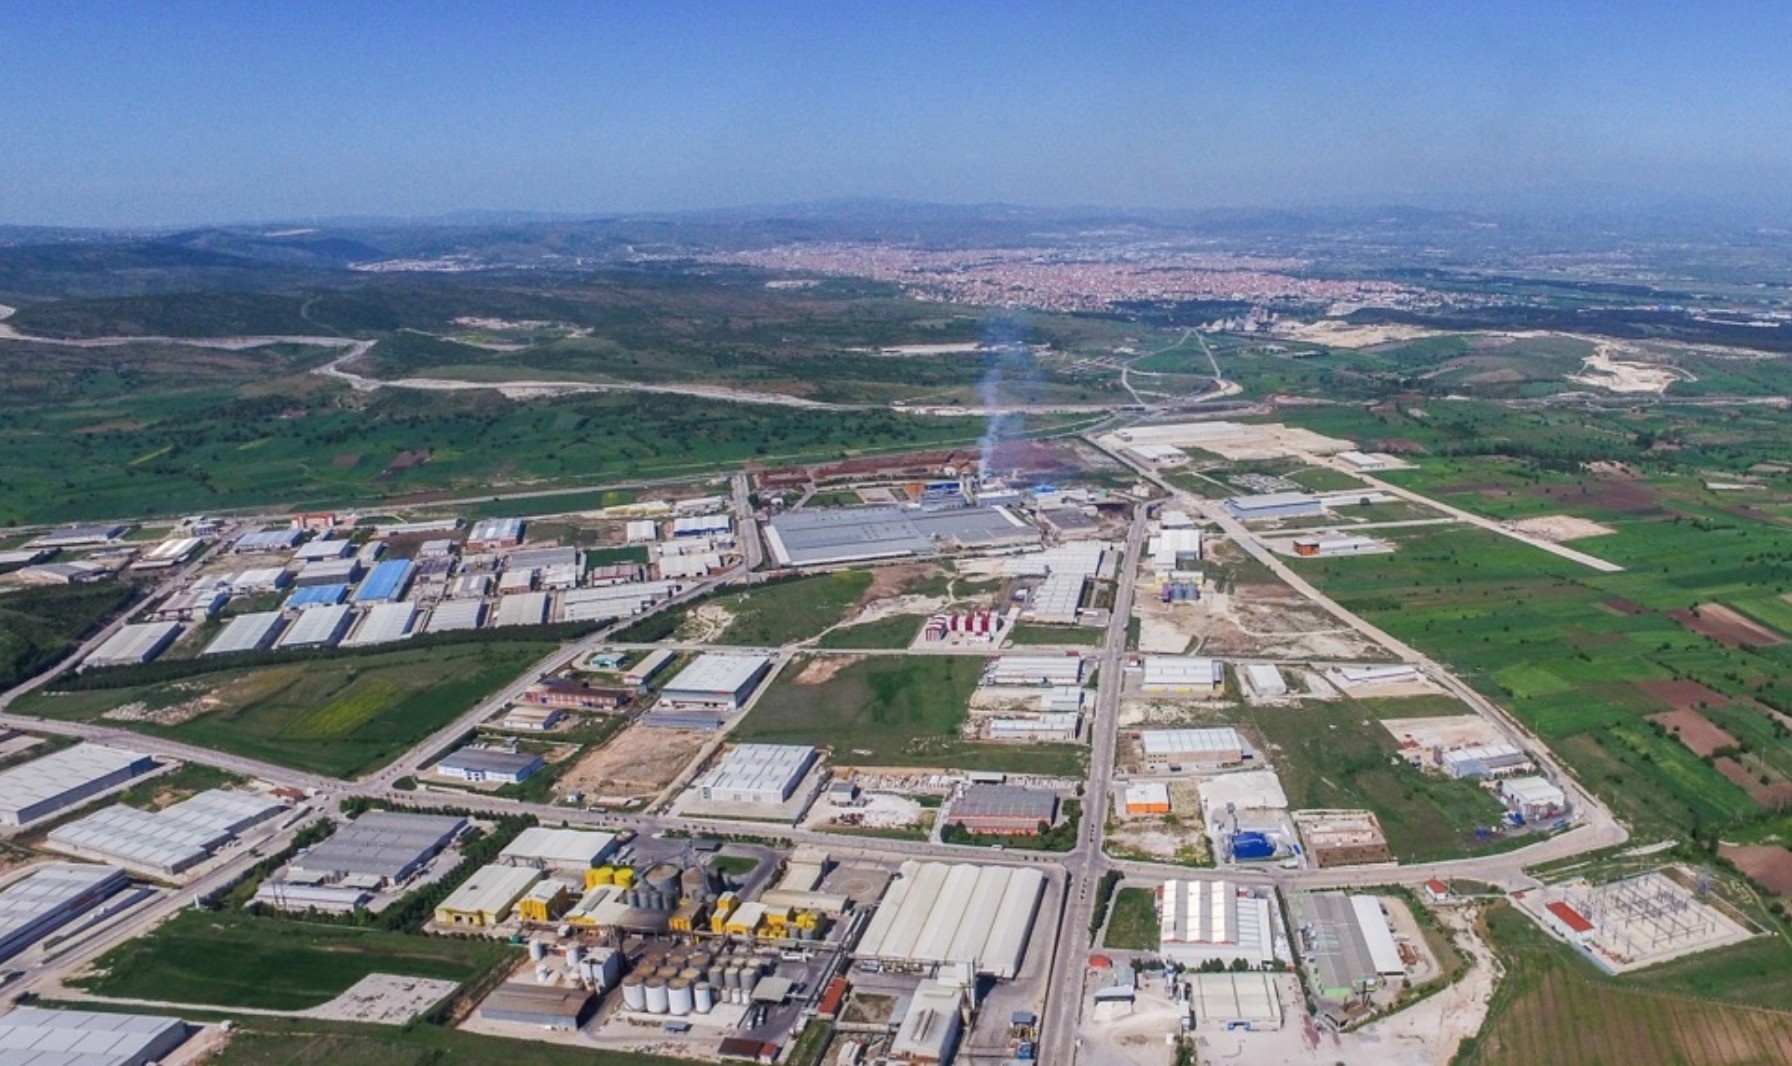 An aerial view of the Balu0131kesir Organized Industrial Zone (BALOSB).